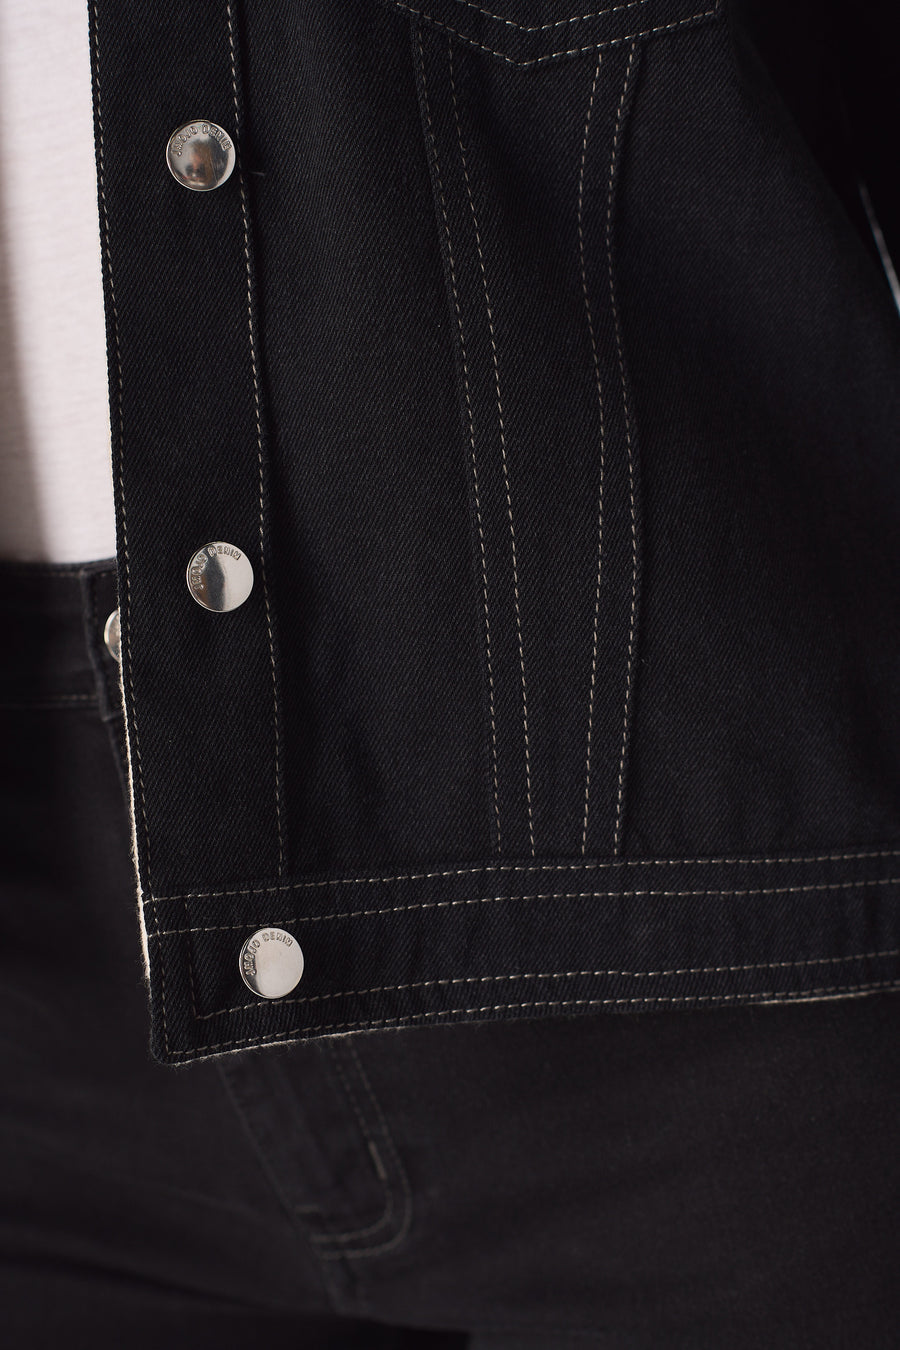 Transeasonal Reversible Denim Jacket - Cotton beige check